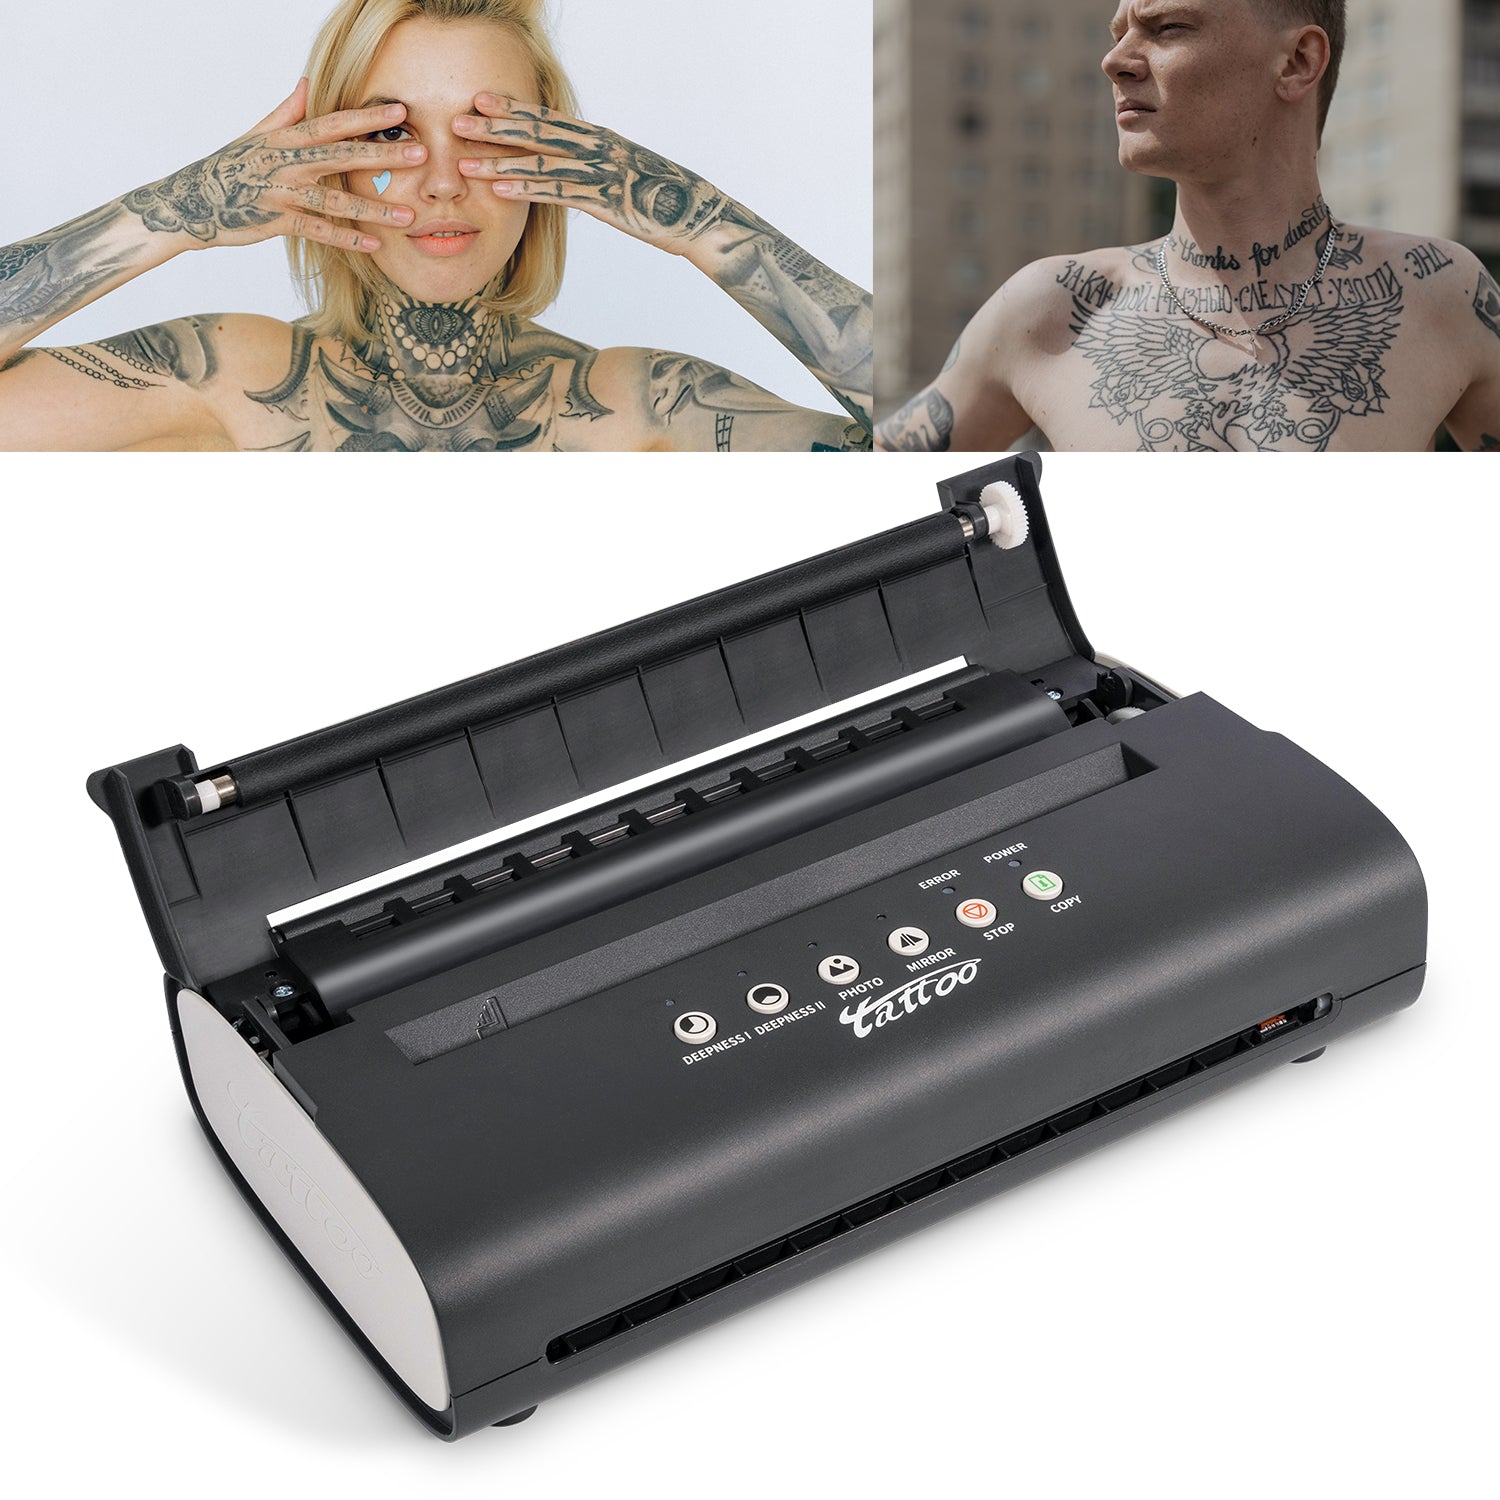 Tattoo Stencil Machine - Portable and Wireless | IMax